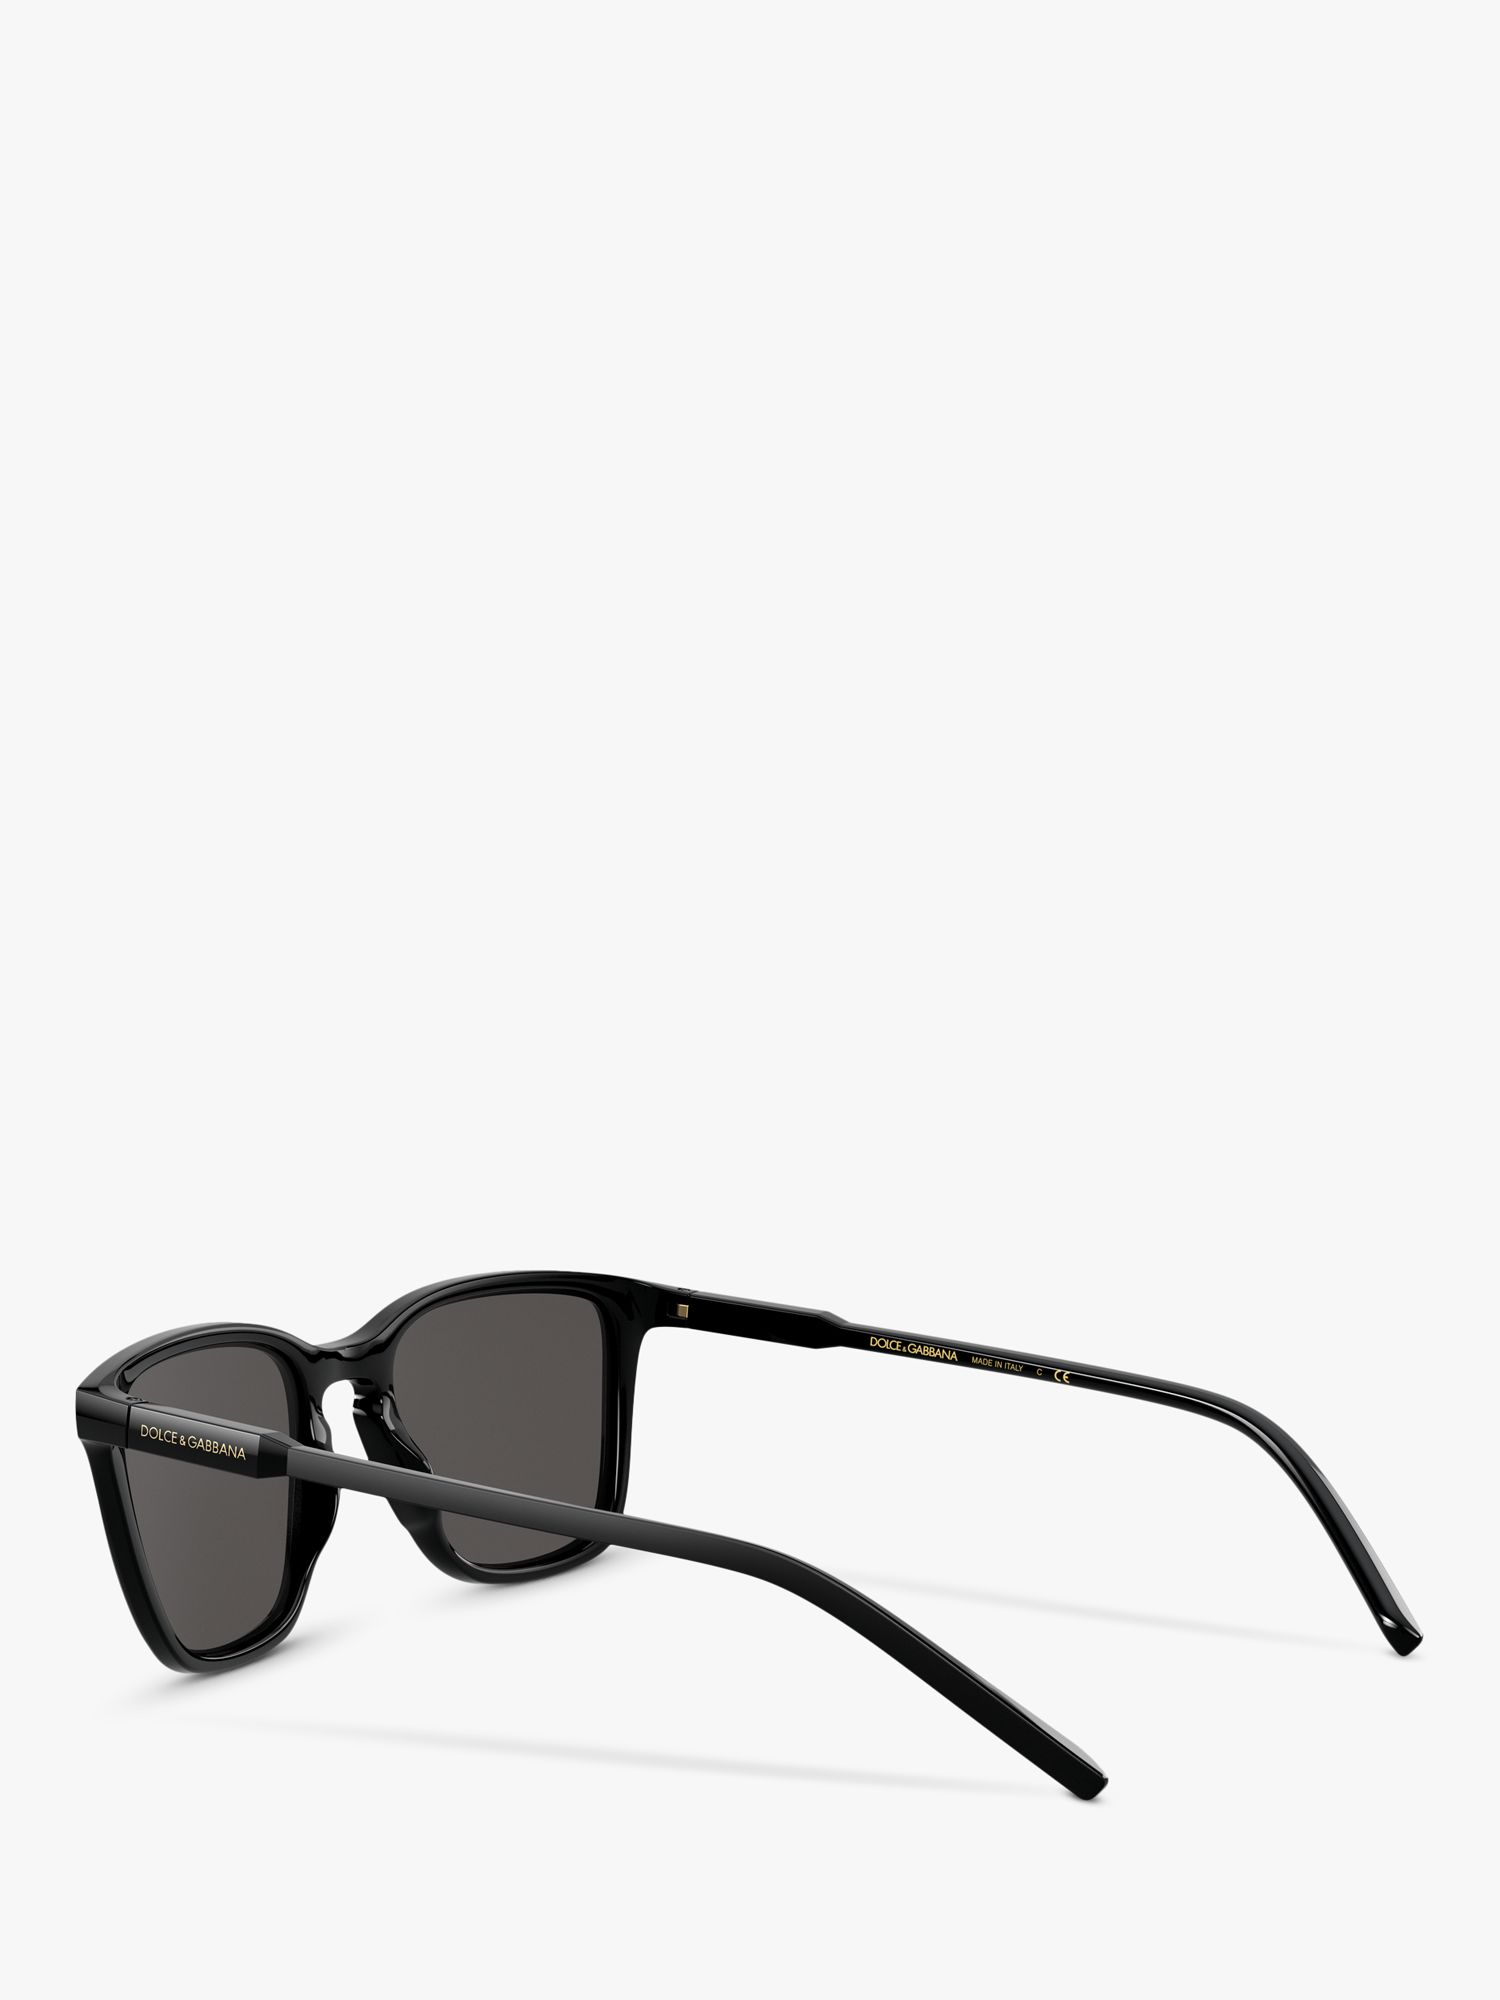 Dolce & Gabbana DG6145 Men's Square Sunglasses, Black/Dark Grey at John ...